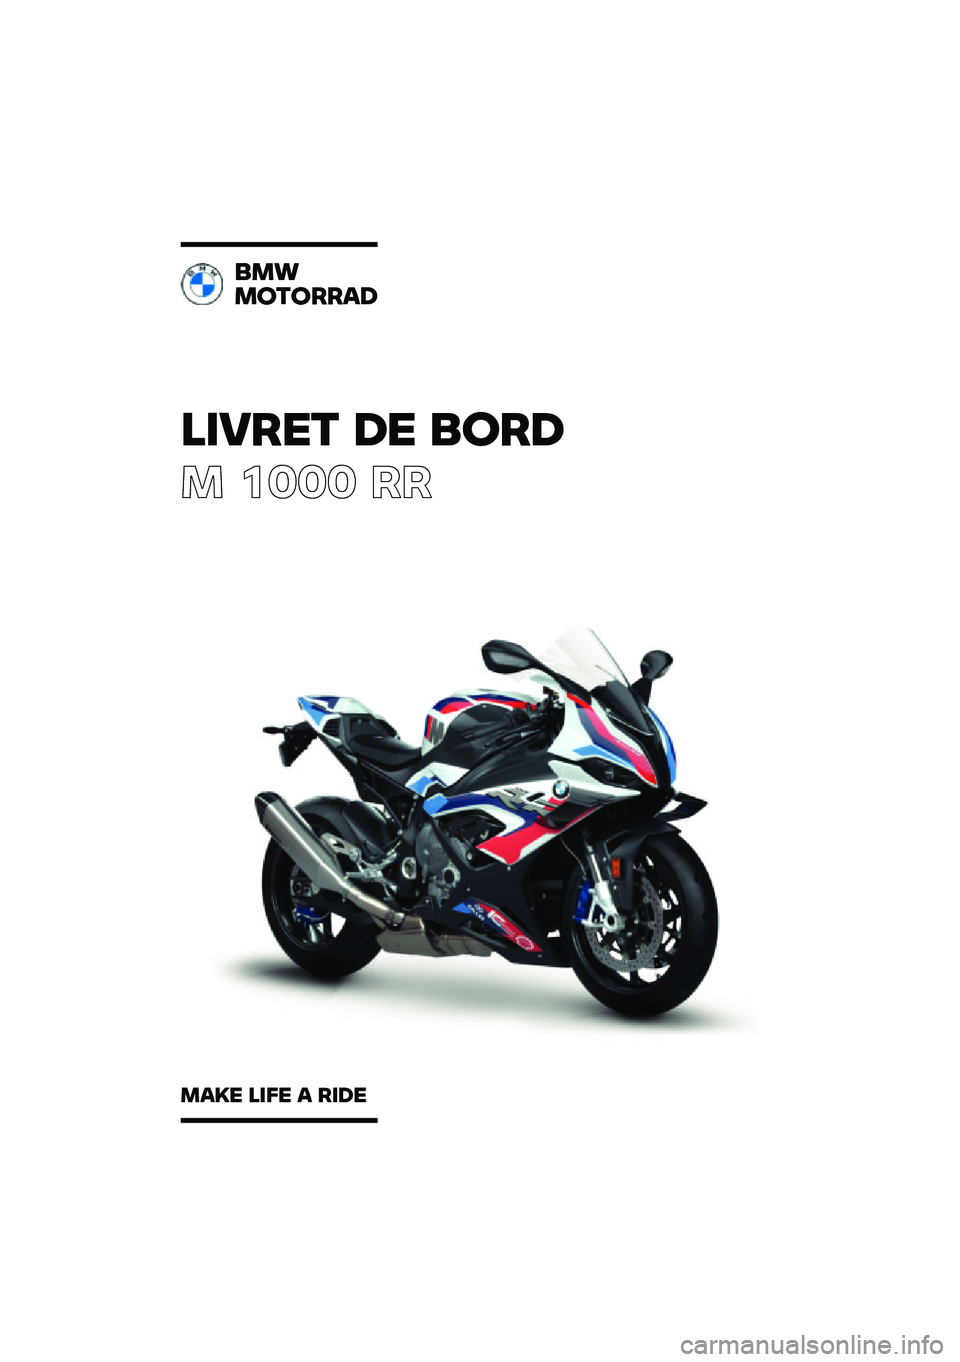 BMW MOTORRAD M 1000 RR 2021  Livret de bord (in French) ������ �\b� �	�
��\b
� ���� ��
�	��\f
��
��
���
�\b
��
�� ���� �
 ���\b� 